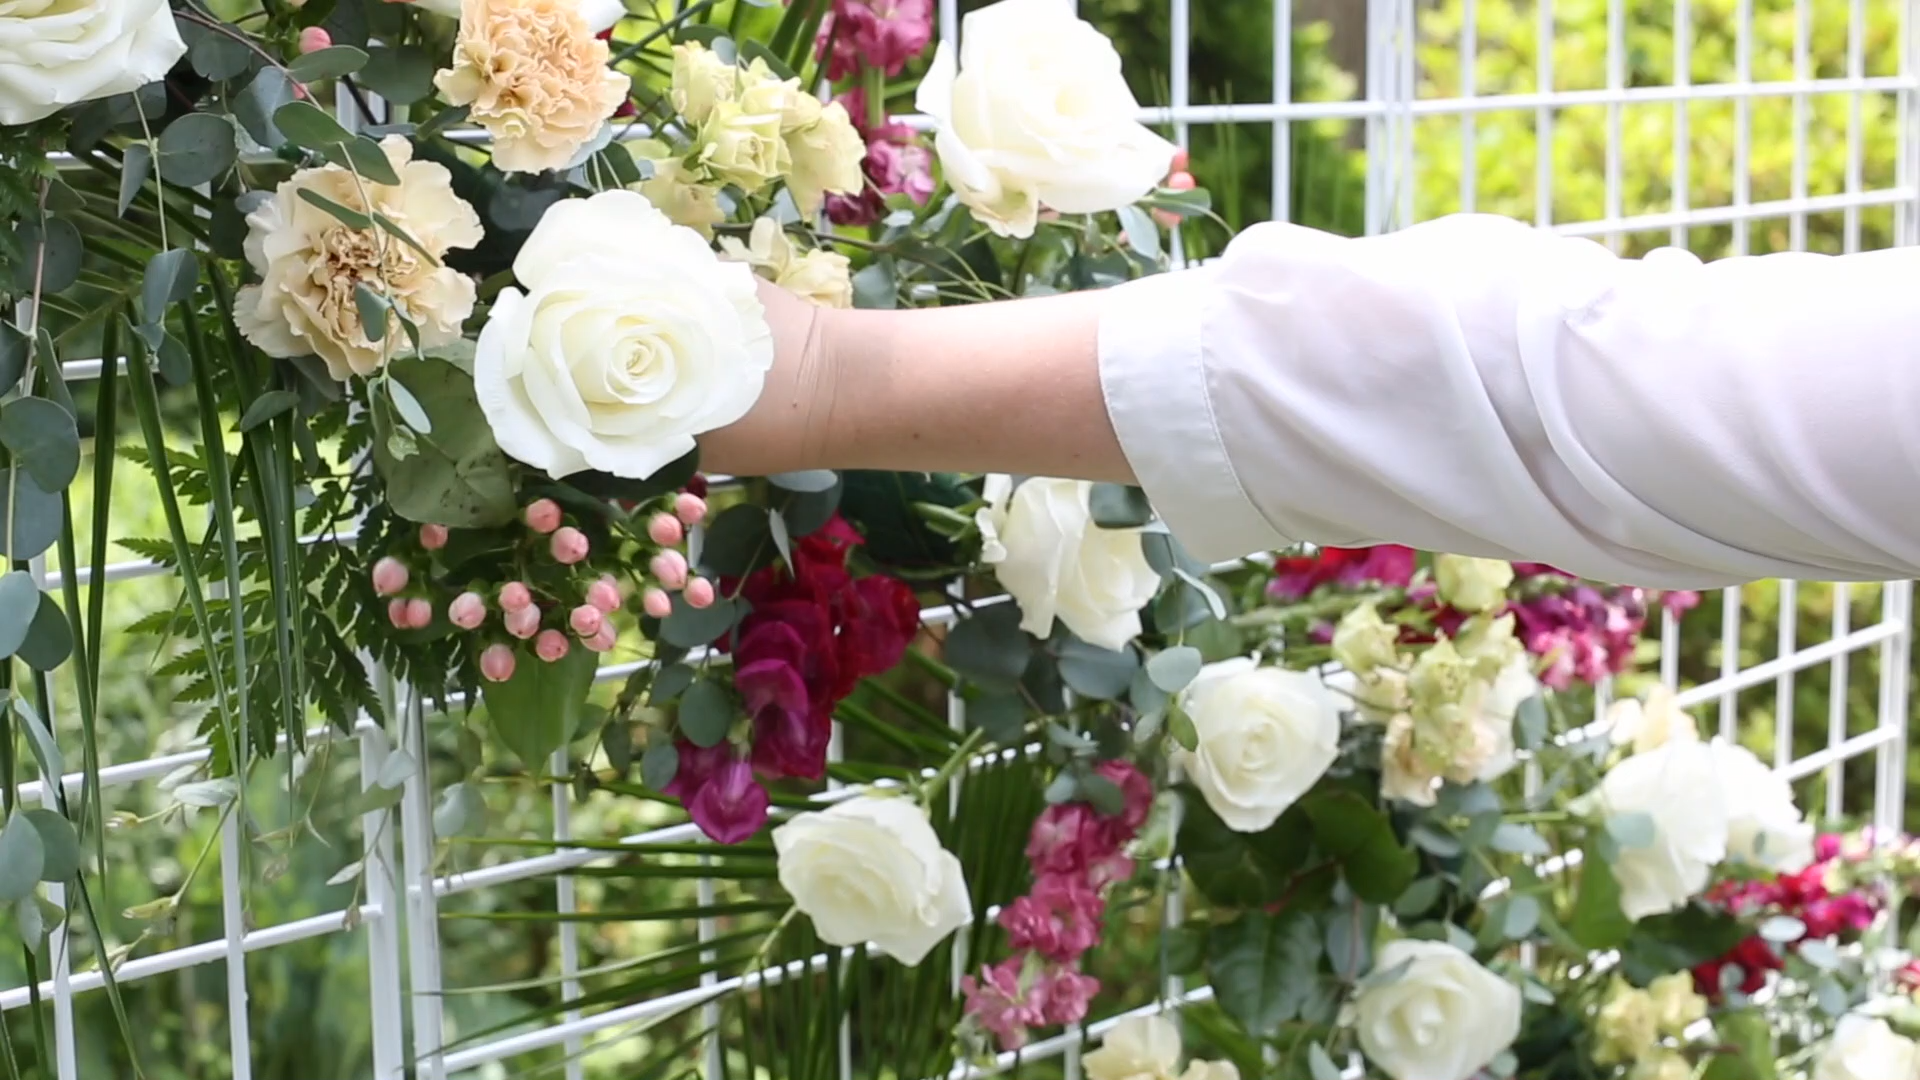 DIY Ceremony Flowers - DIY Ceremony Flowers -   18 diy Wedding backdrop ideas